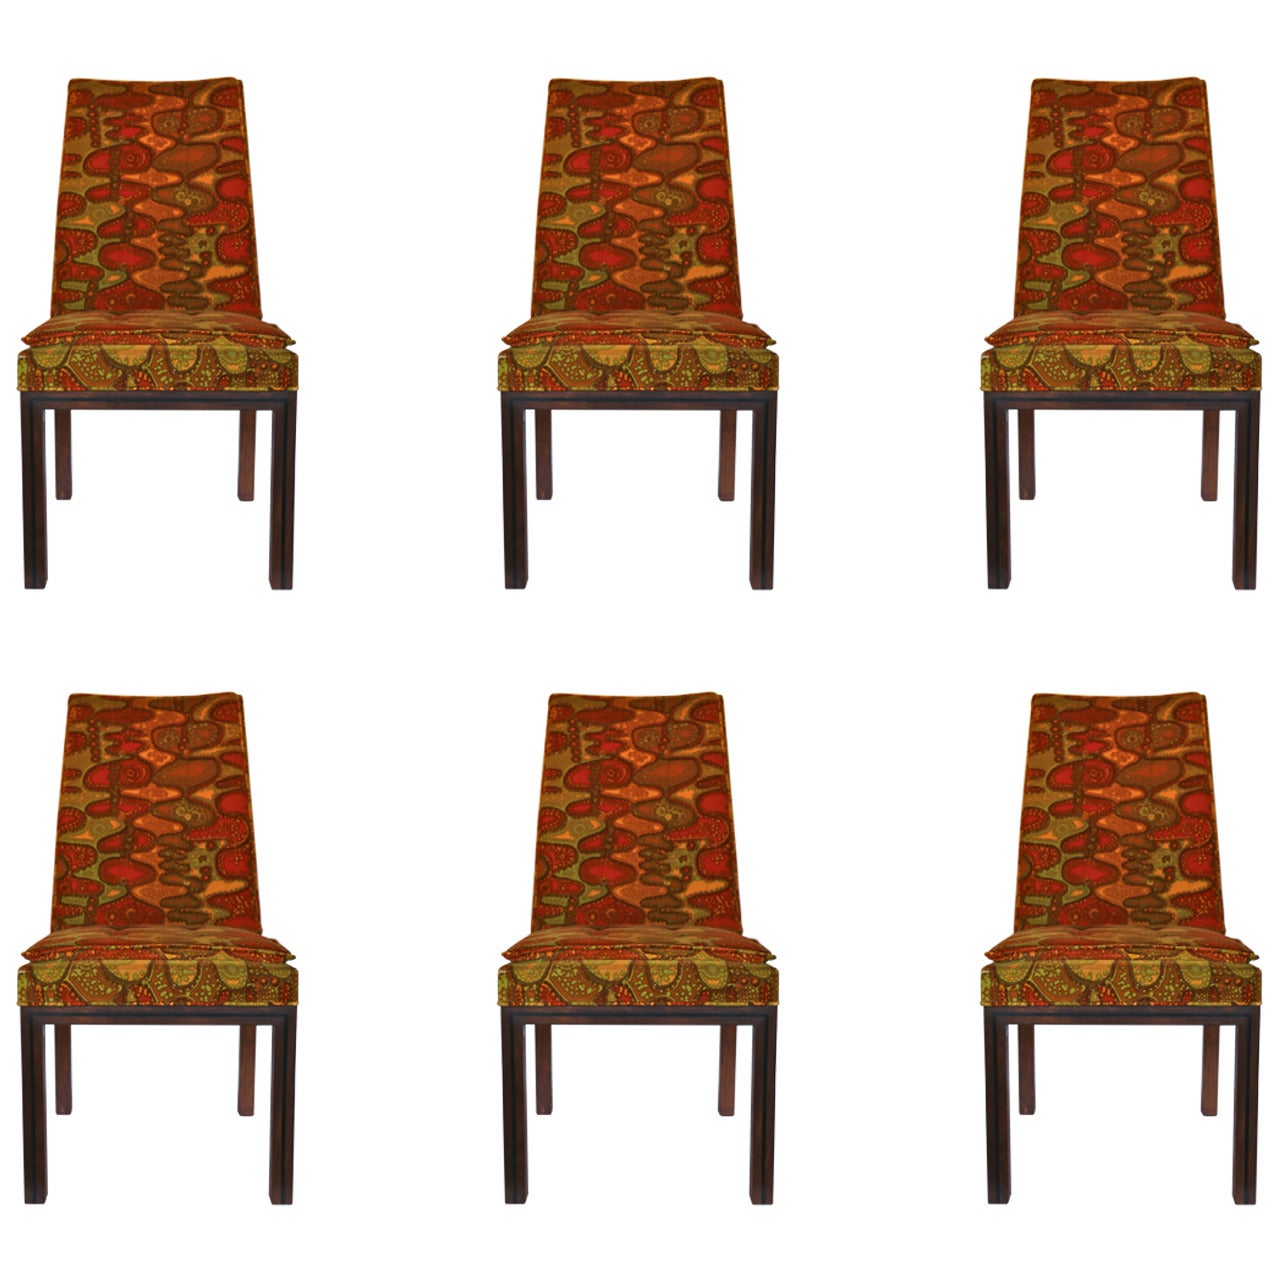 Set of Six Dining Chairs by Robert Baron with Original Jack Lenor Larsen Fabric